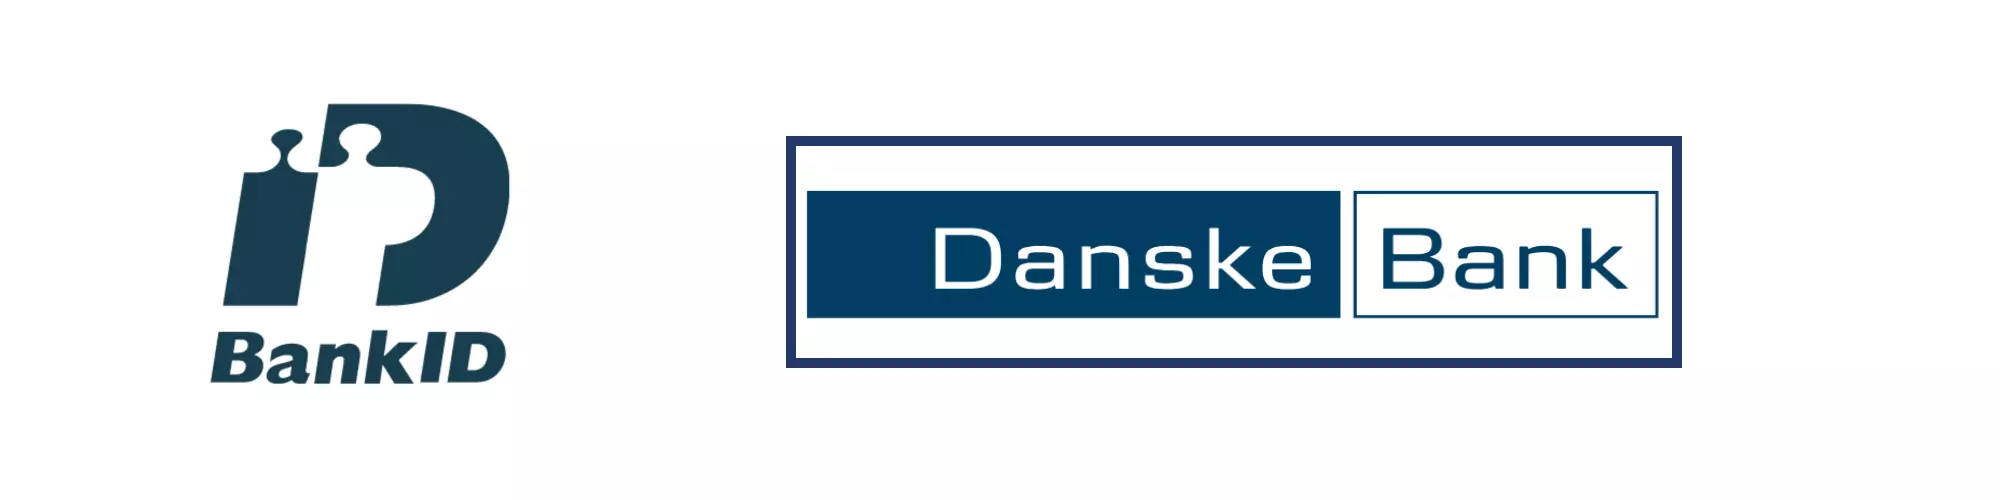 danske bank bankid